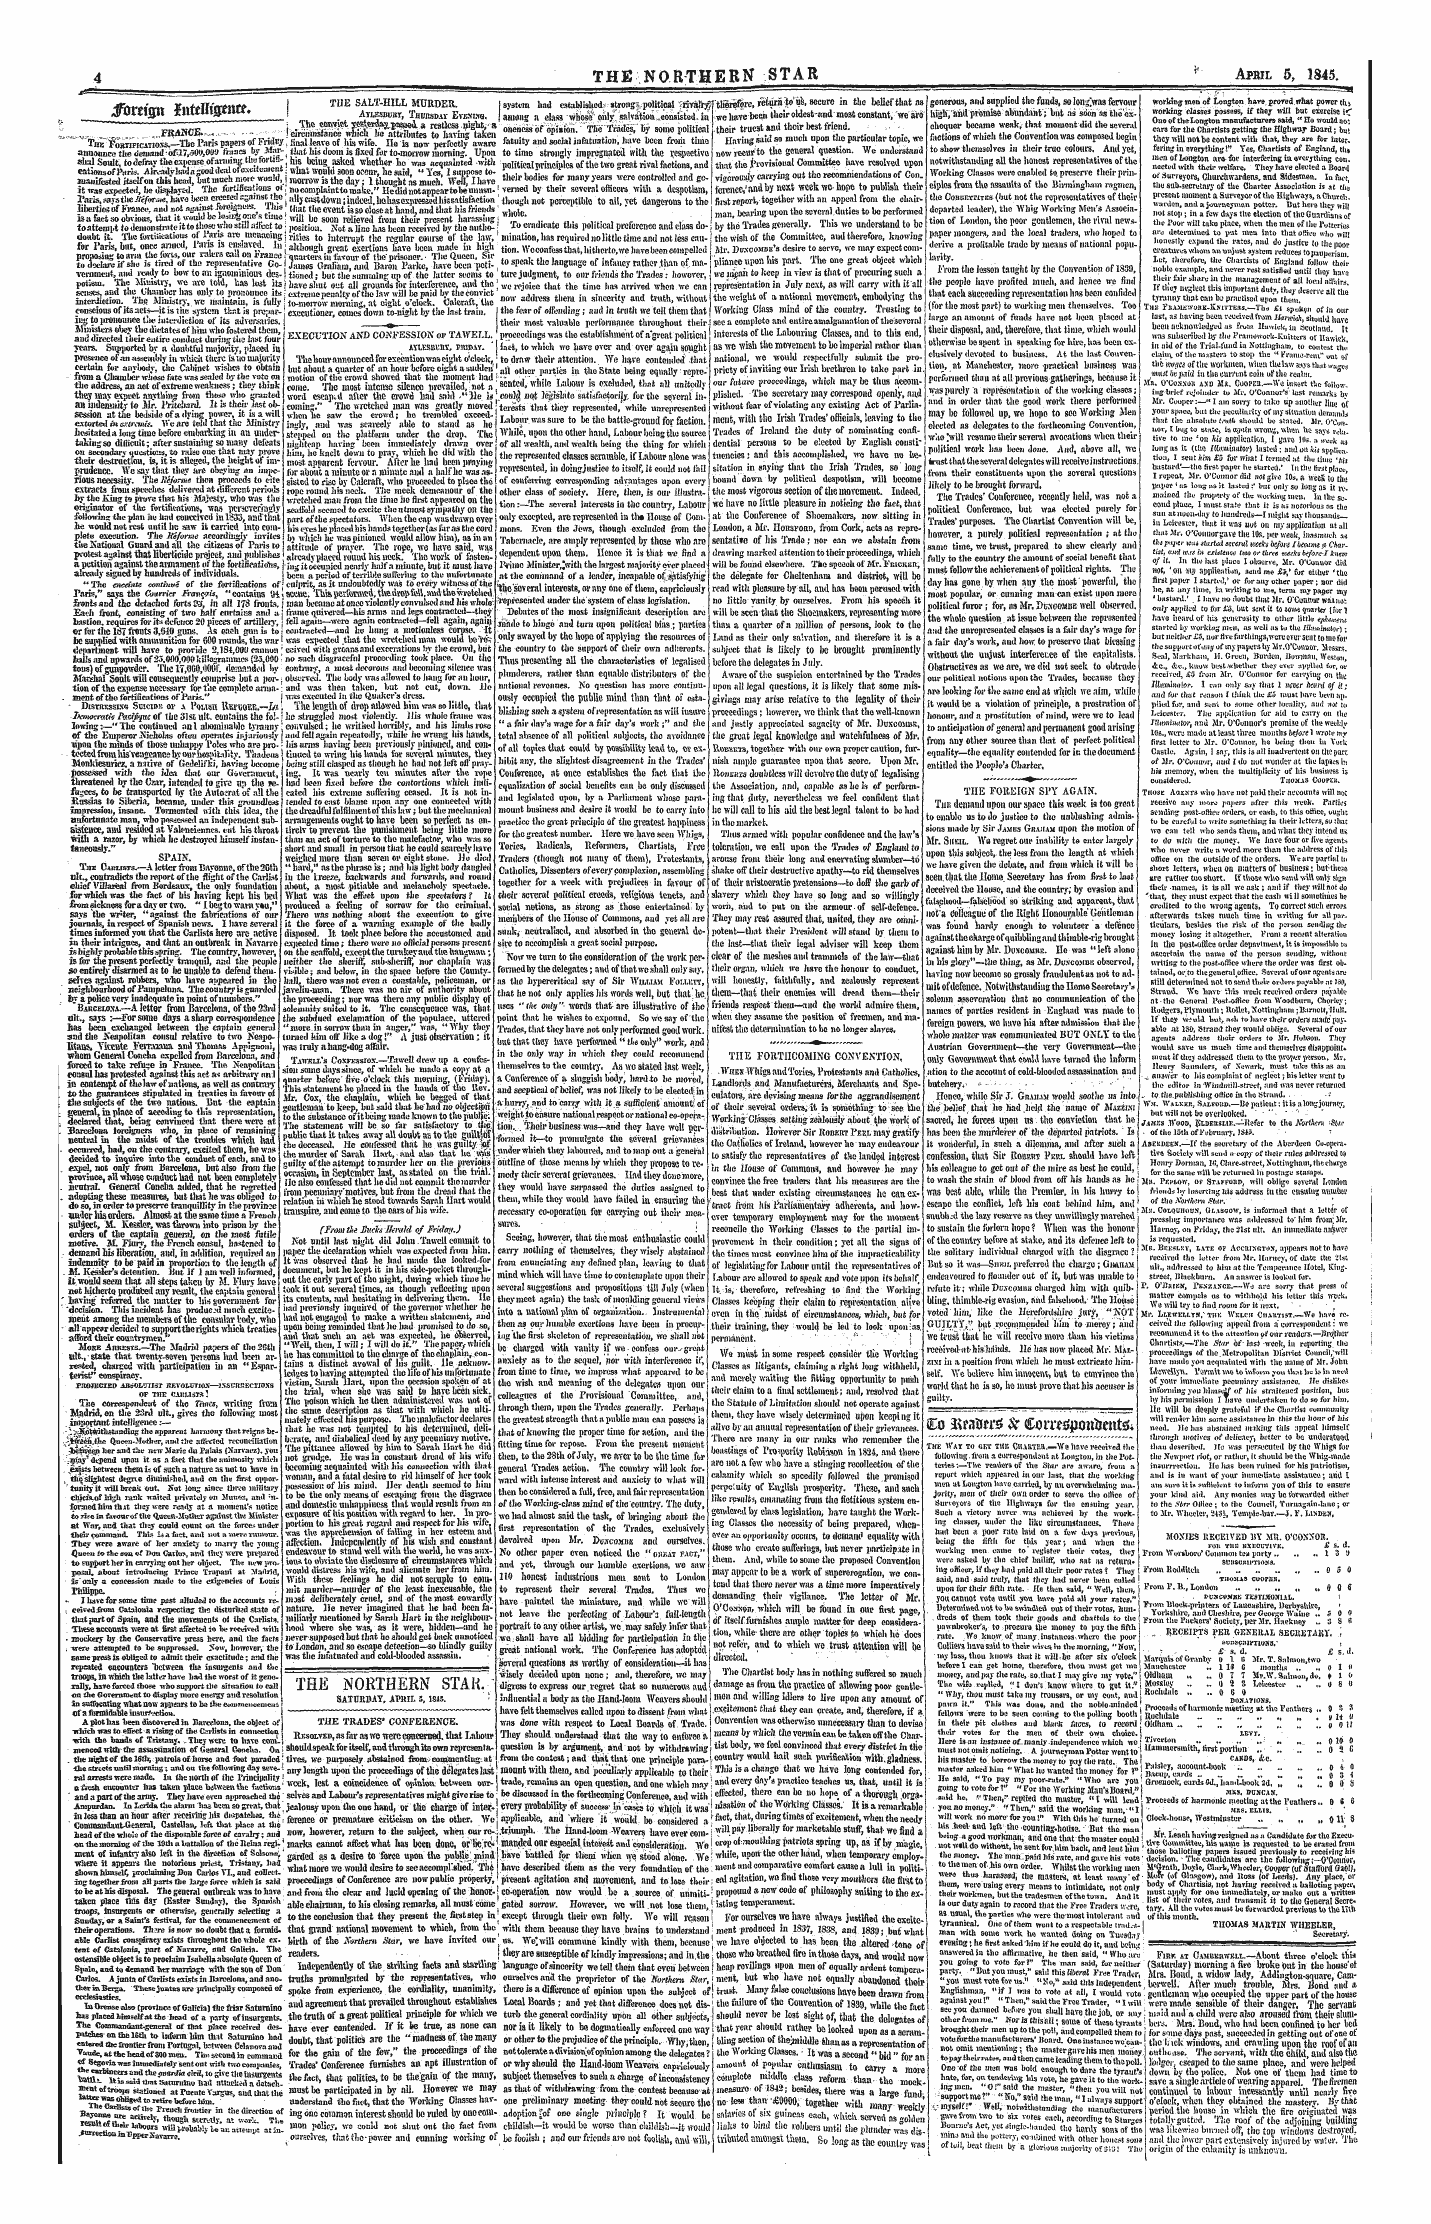 Northern Star (1837-1852): jS F Y, 1st edition - The Salt-Hill Murder.